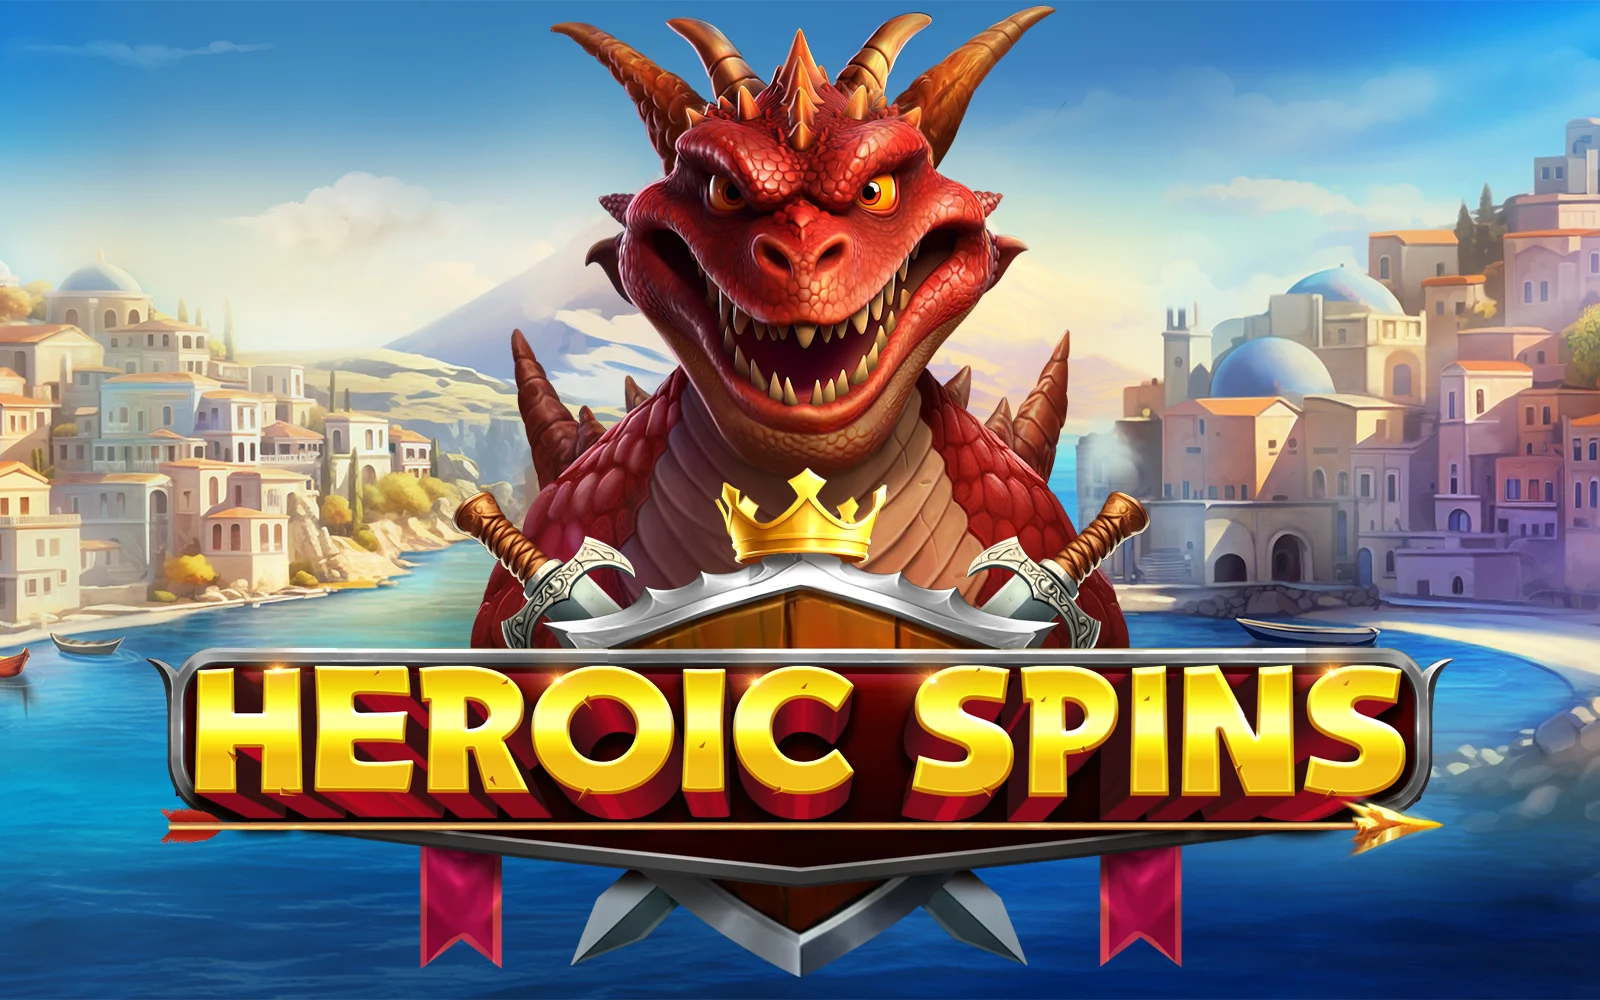 Gioca a Heroic Spins sul casino online Starcasino.be